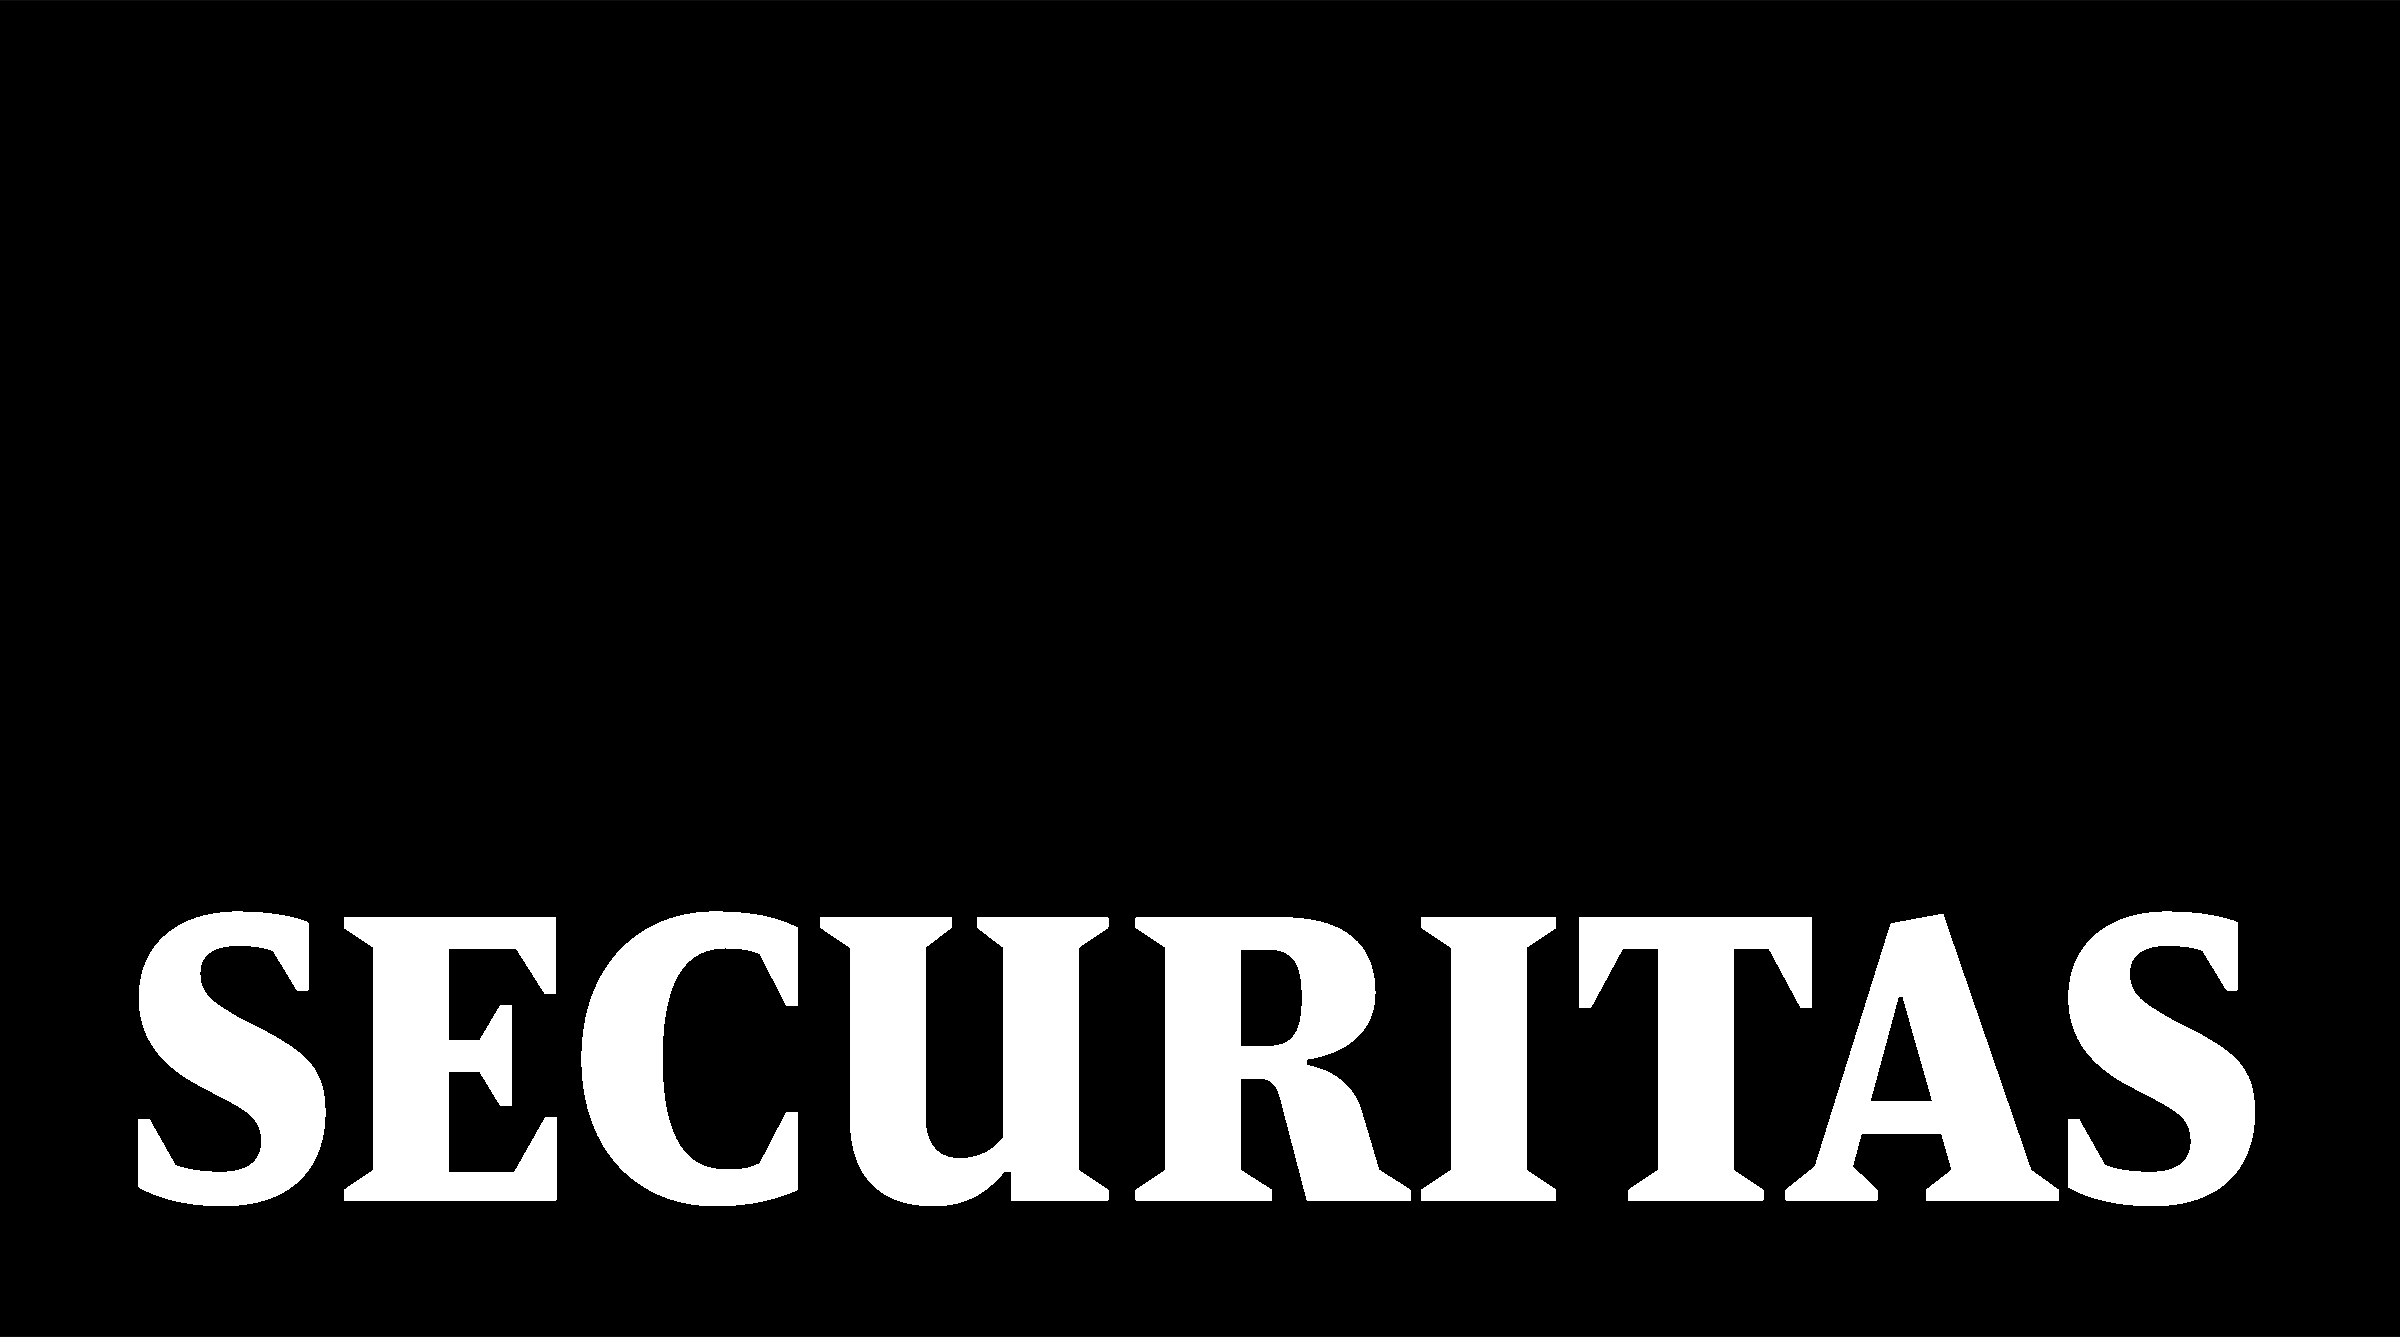 Securitas Logo - Securitas Logo PNG Transparent & SVG Vector - Freebie Supply